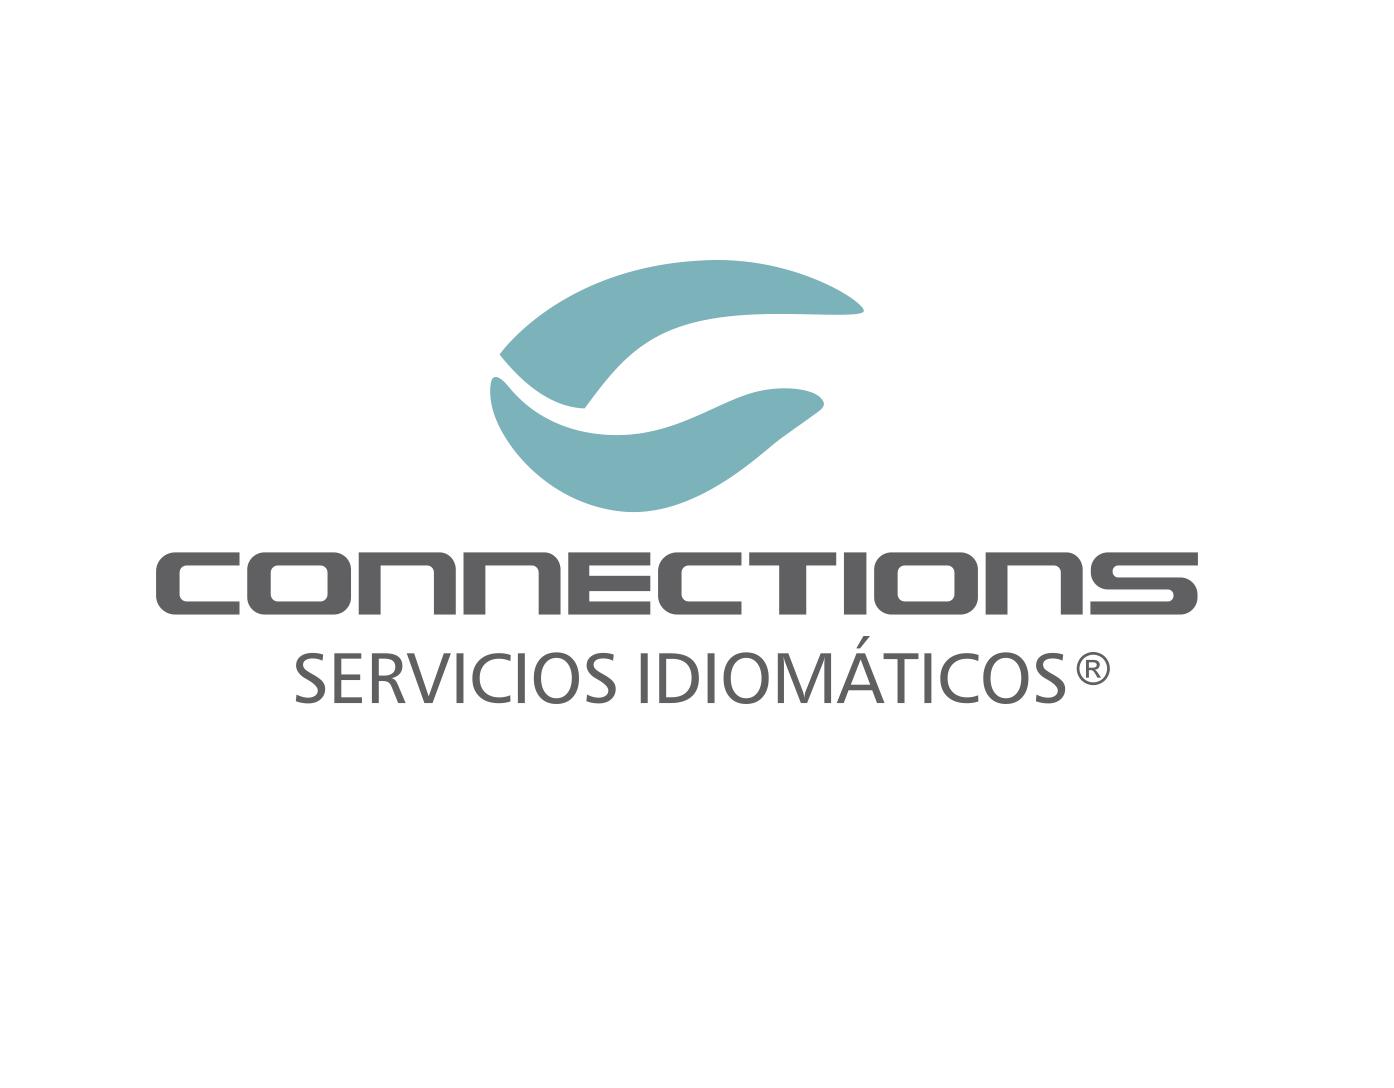 CONNECTIONS - Servicios idiomáticos